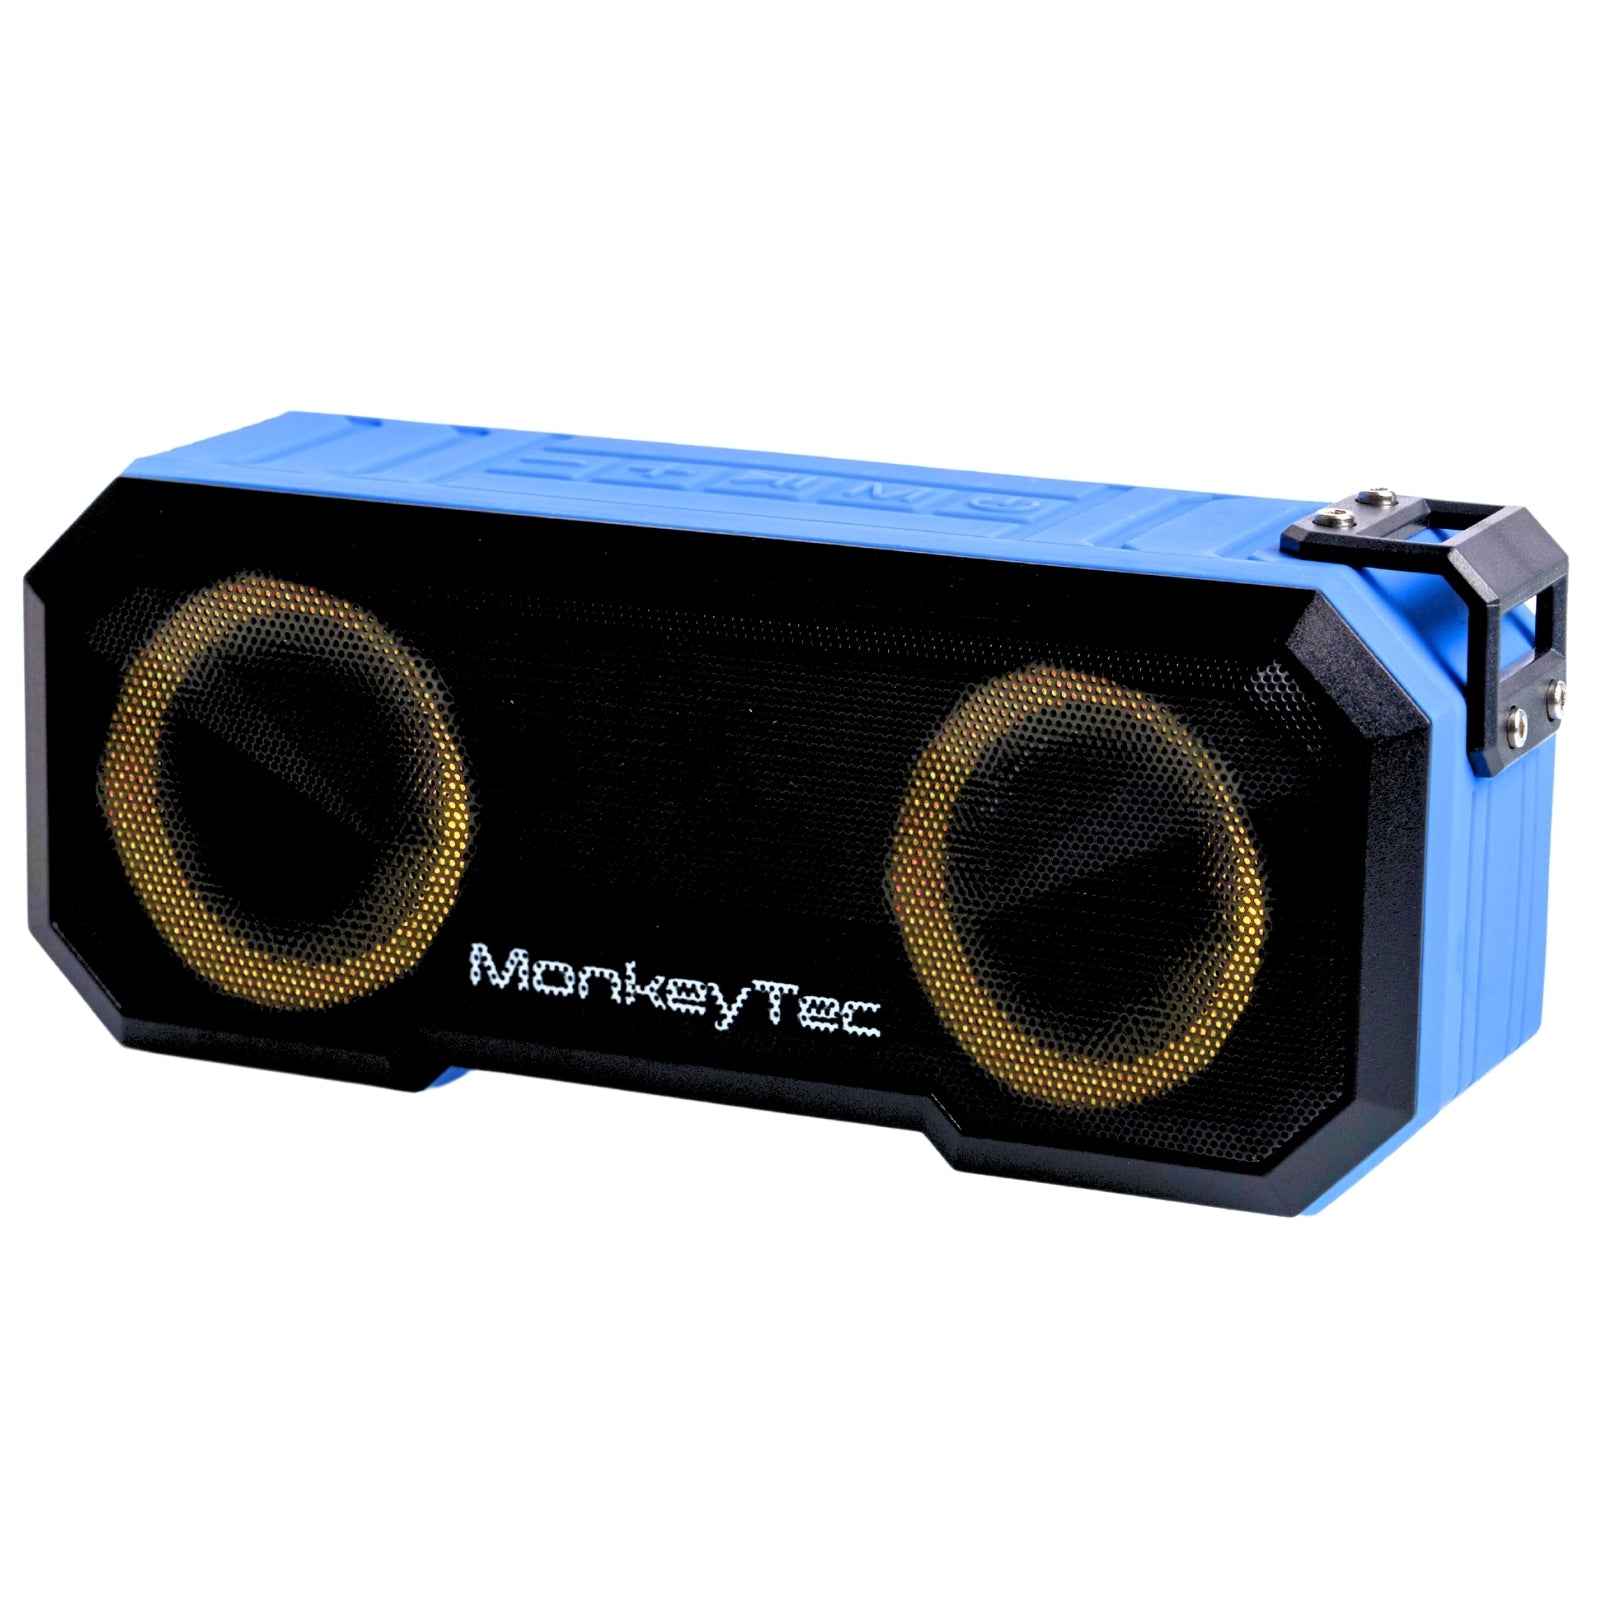 MonkeyTEC Bluetooth speaker LED effect IPX7 waterproof power bank function 3,000 mAh TWS-SPK-X8